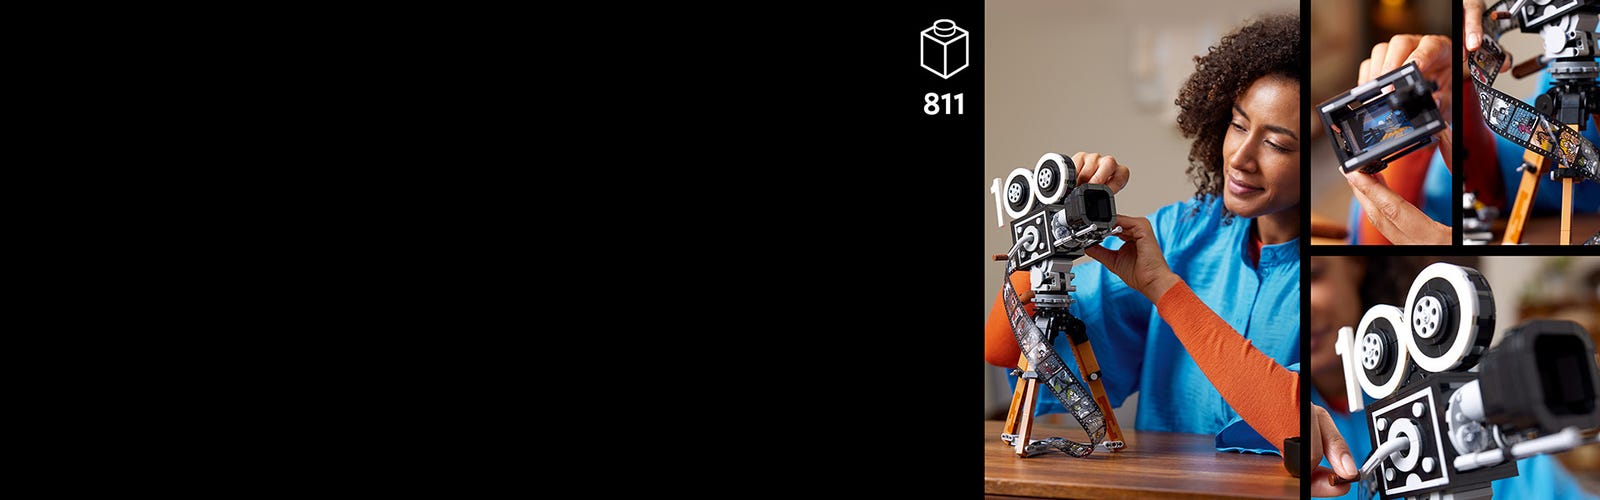 LEGO Disney Walt Disney Tribute Camera 43230 Building Kit (811